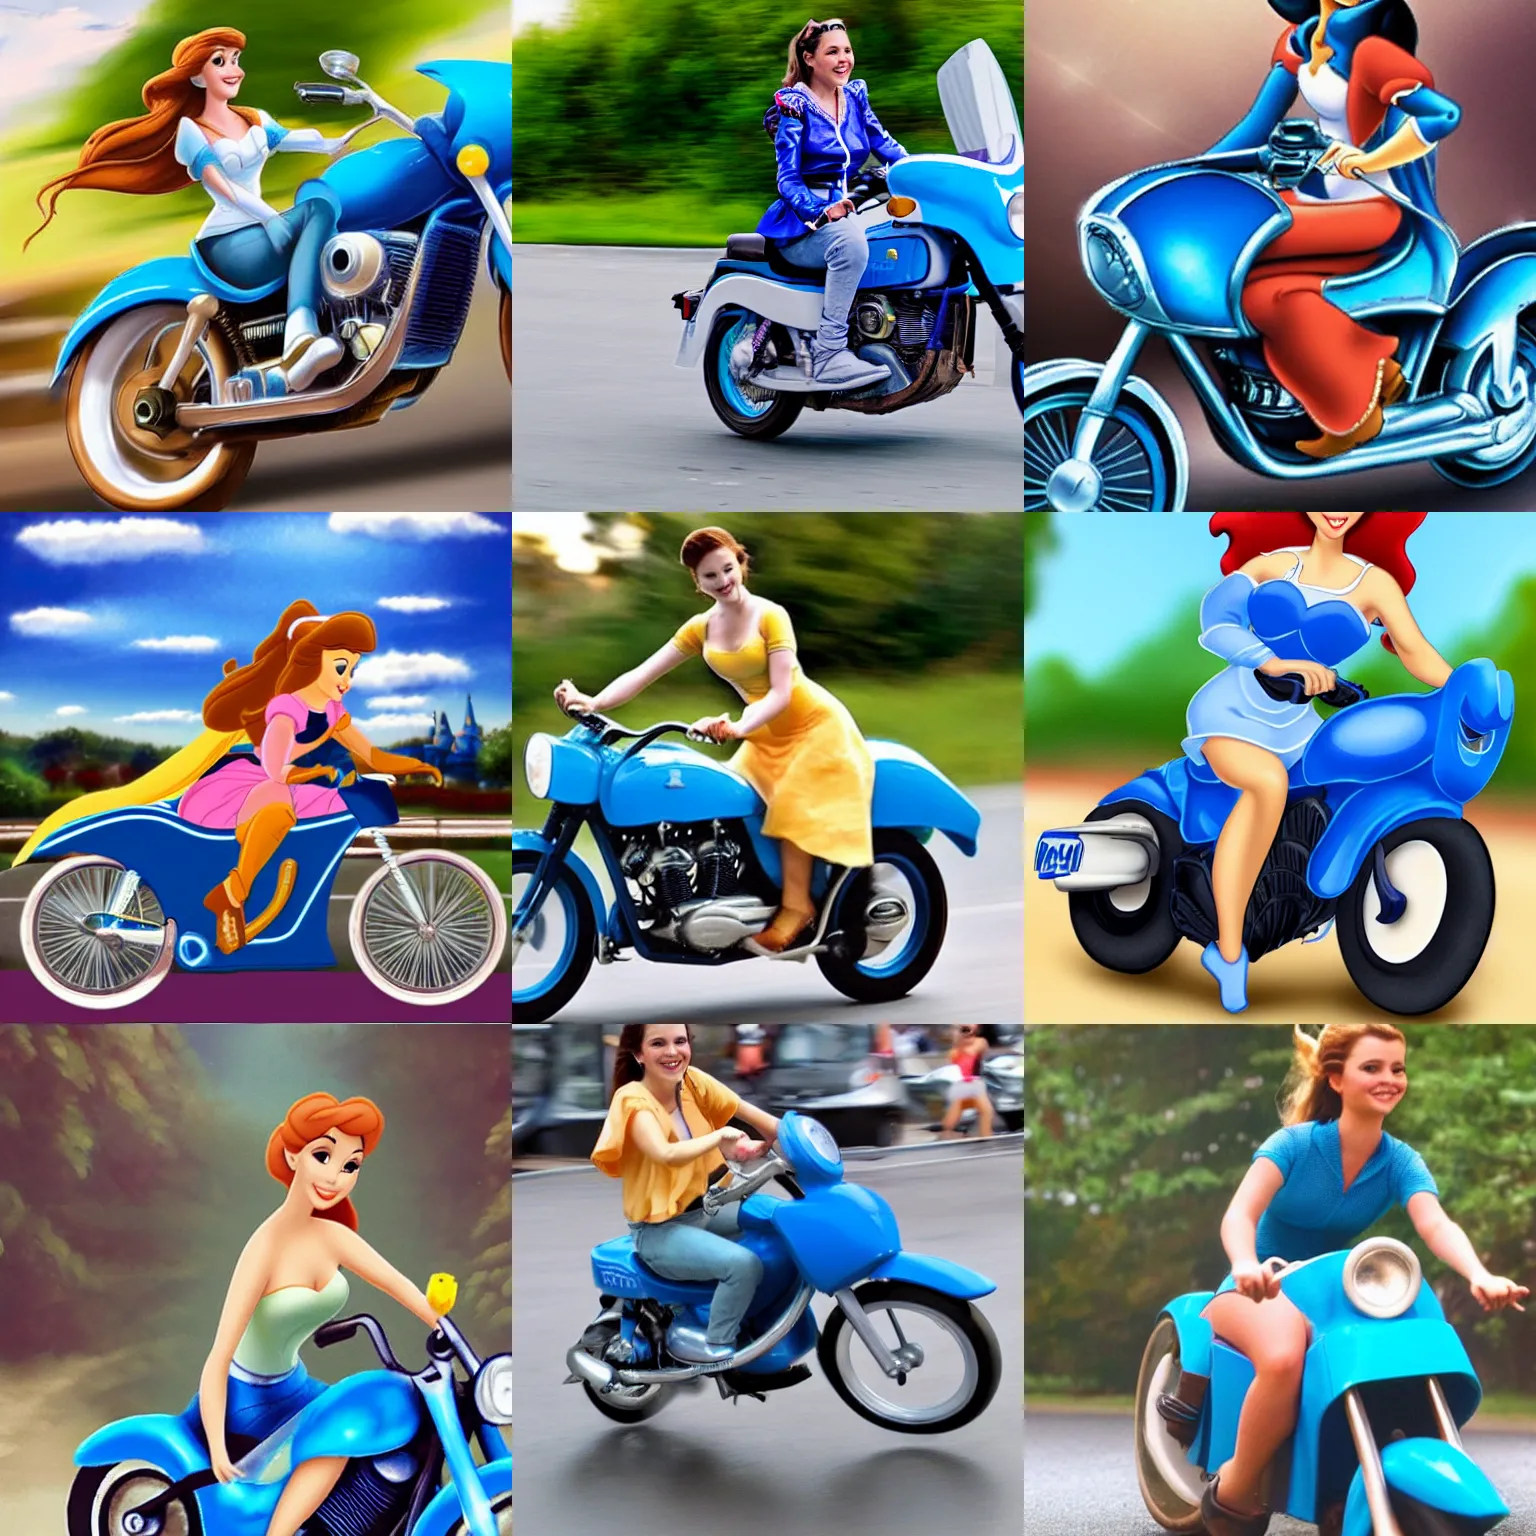 Prompt: Disney princess riding a blue motorbike at high speed